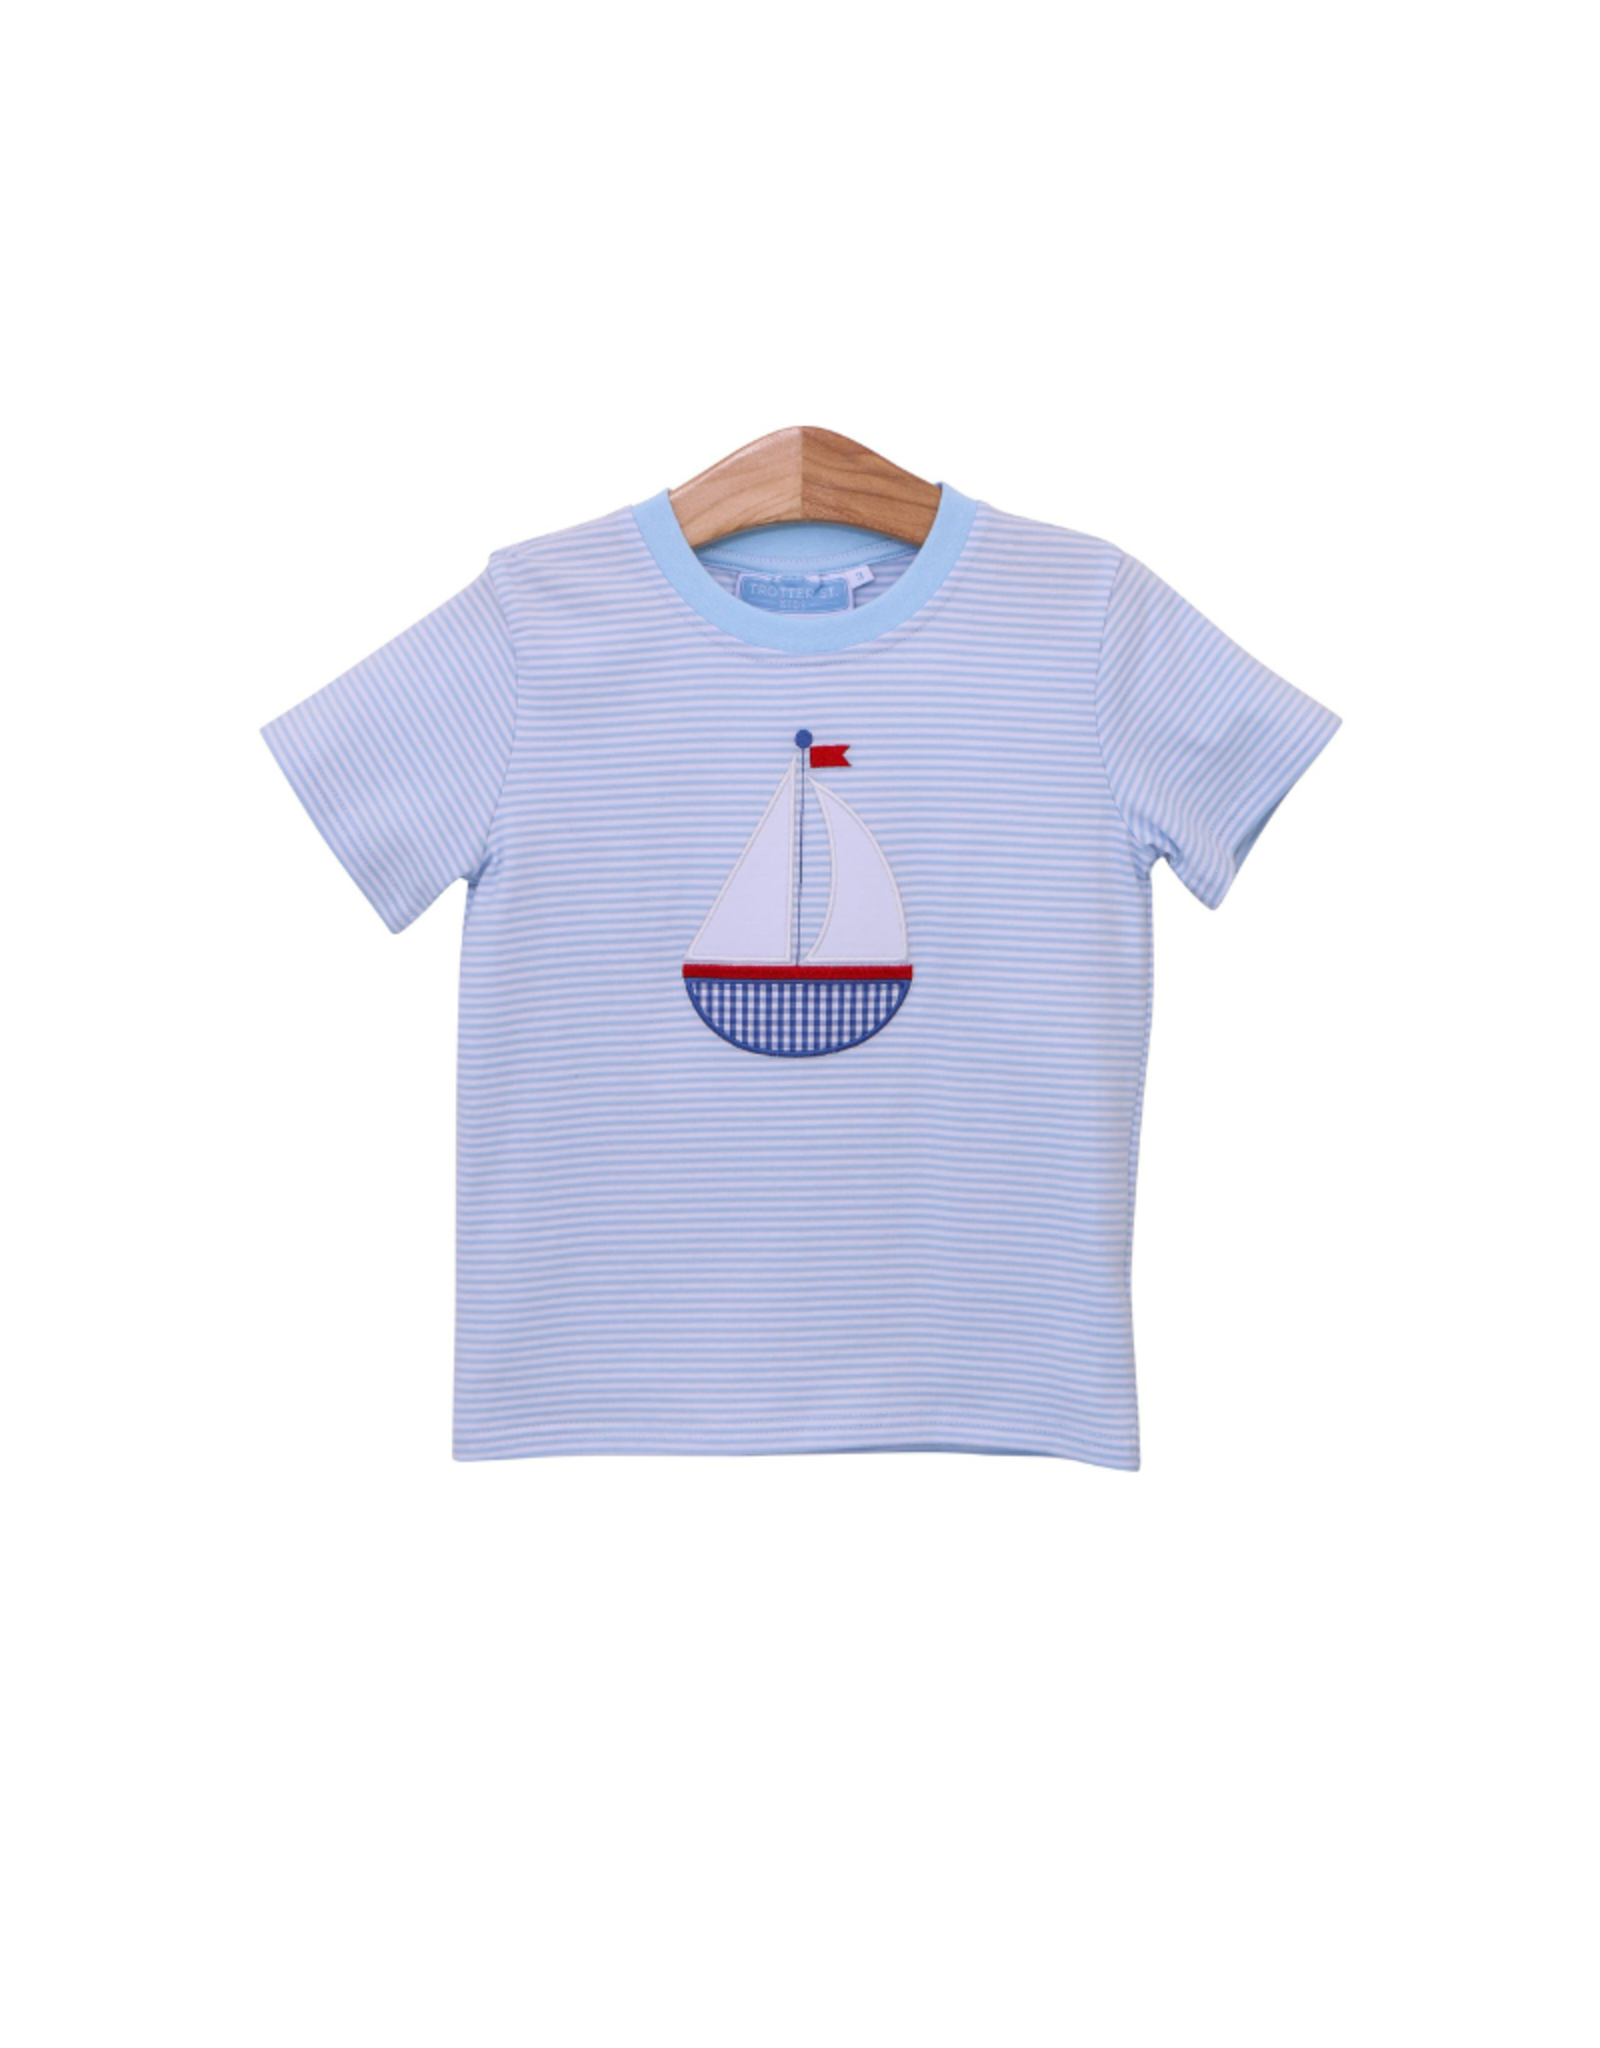 Trotter Street Kids Sailboat Shirt, Blue & White Stripe